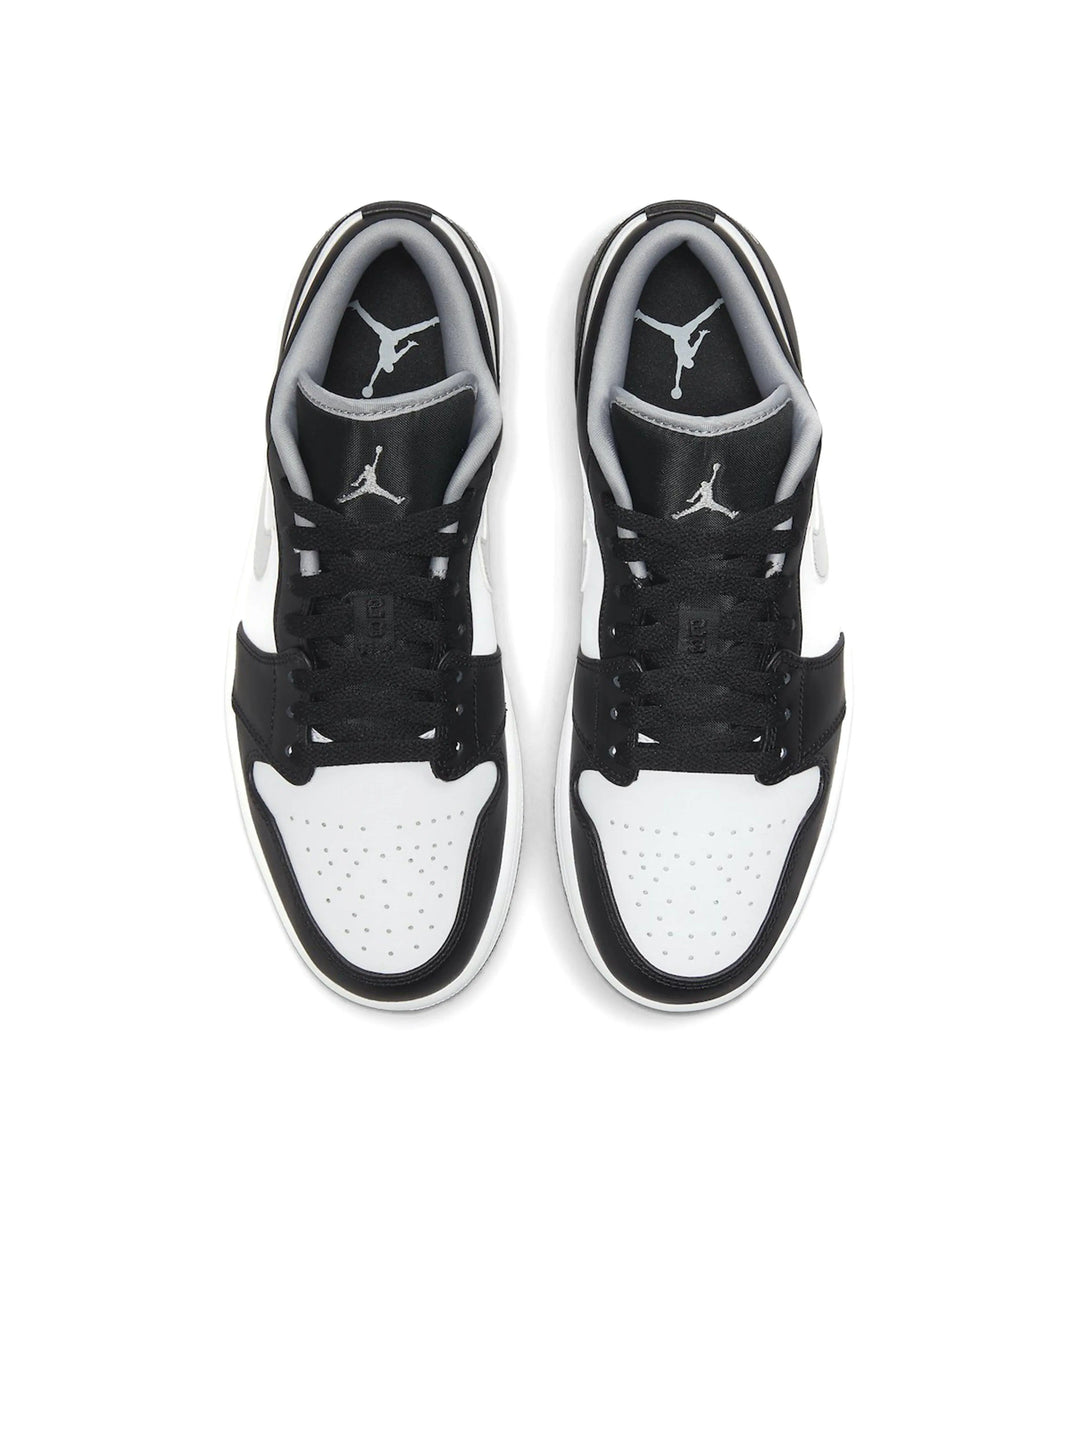 Nike Air Jordan 1 Low Shadow 3.0 Prior